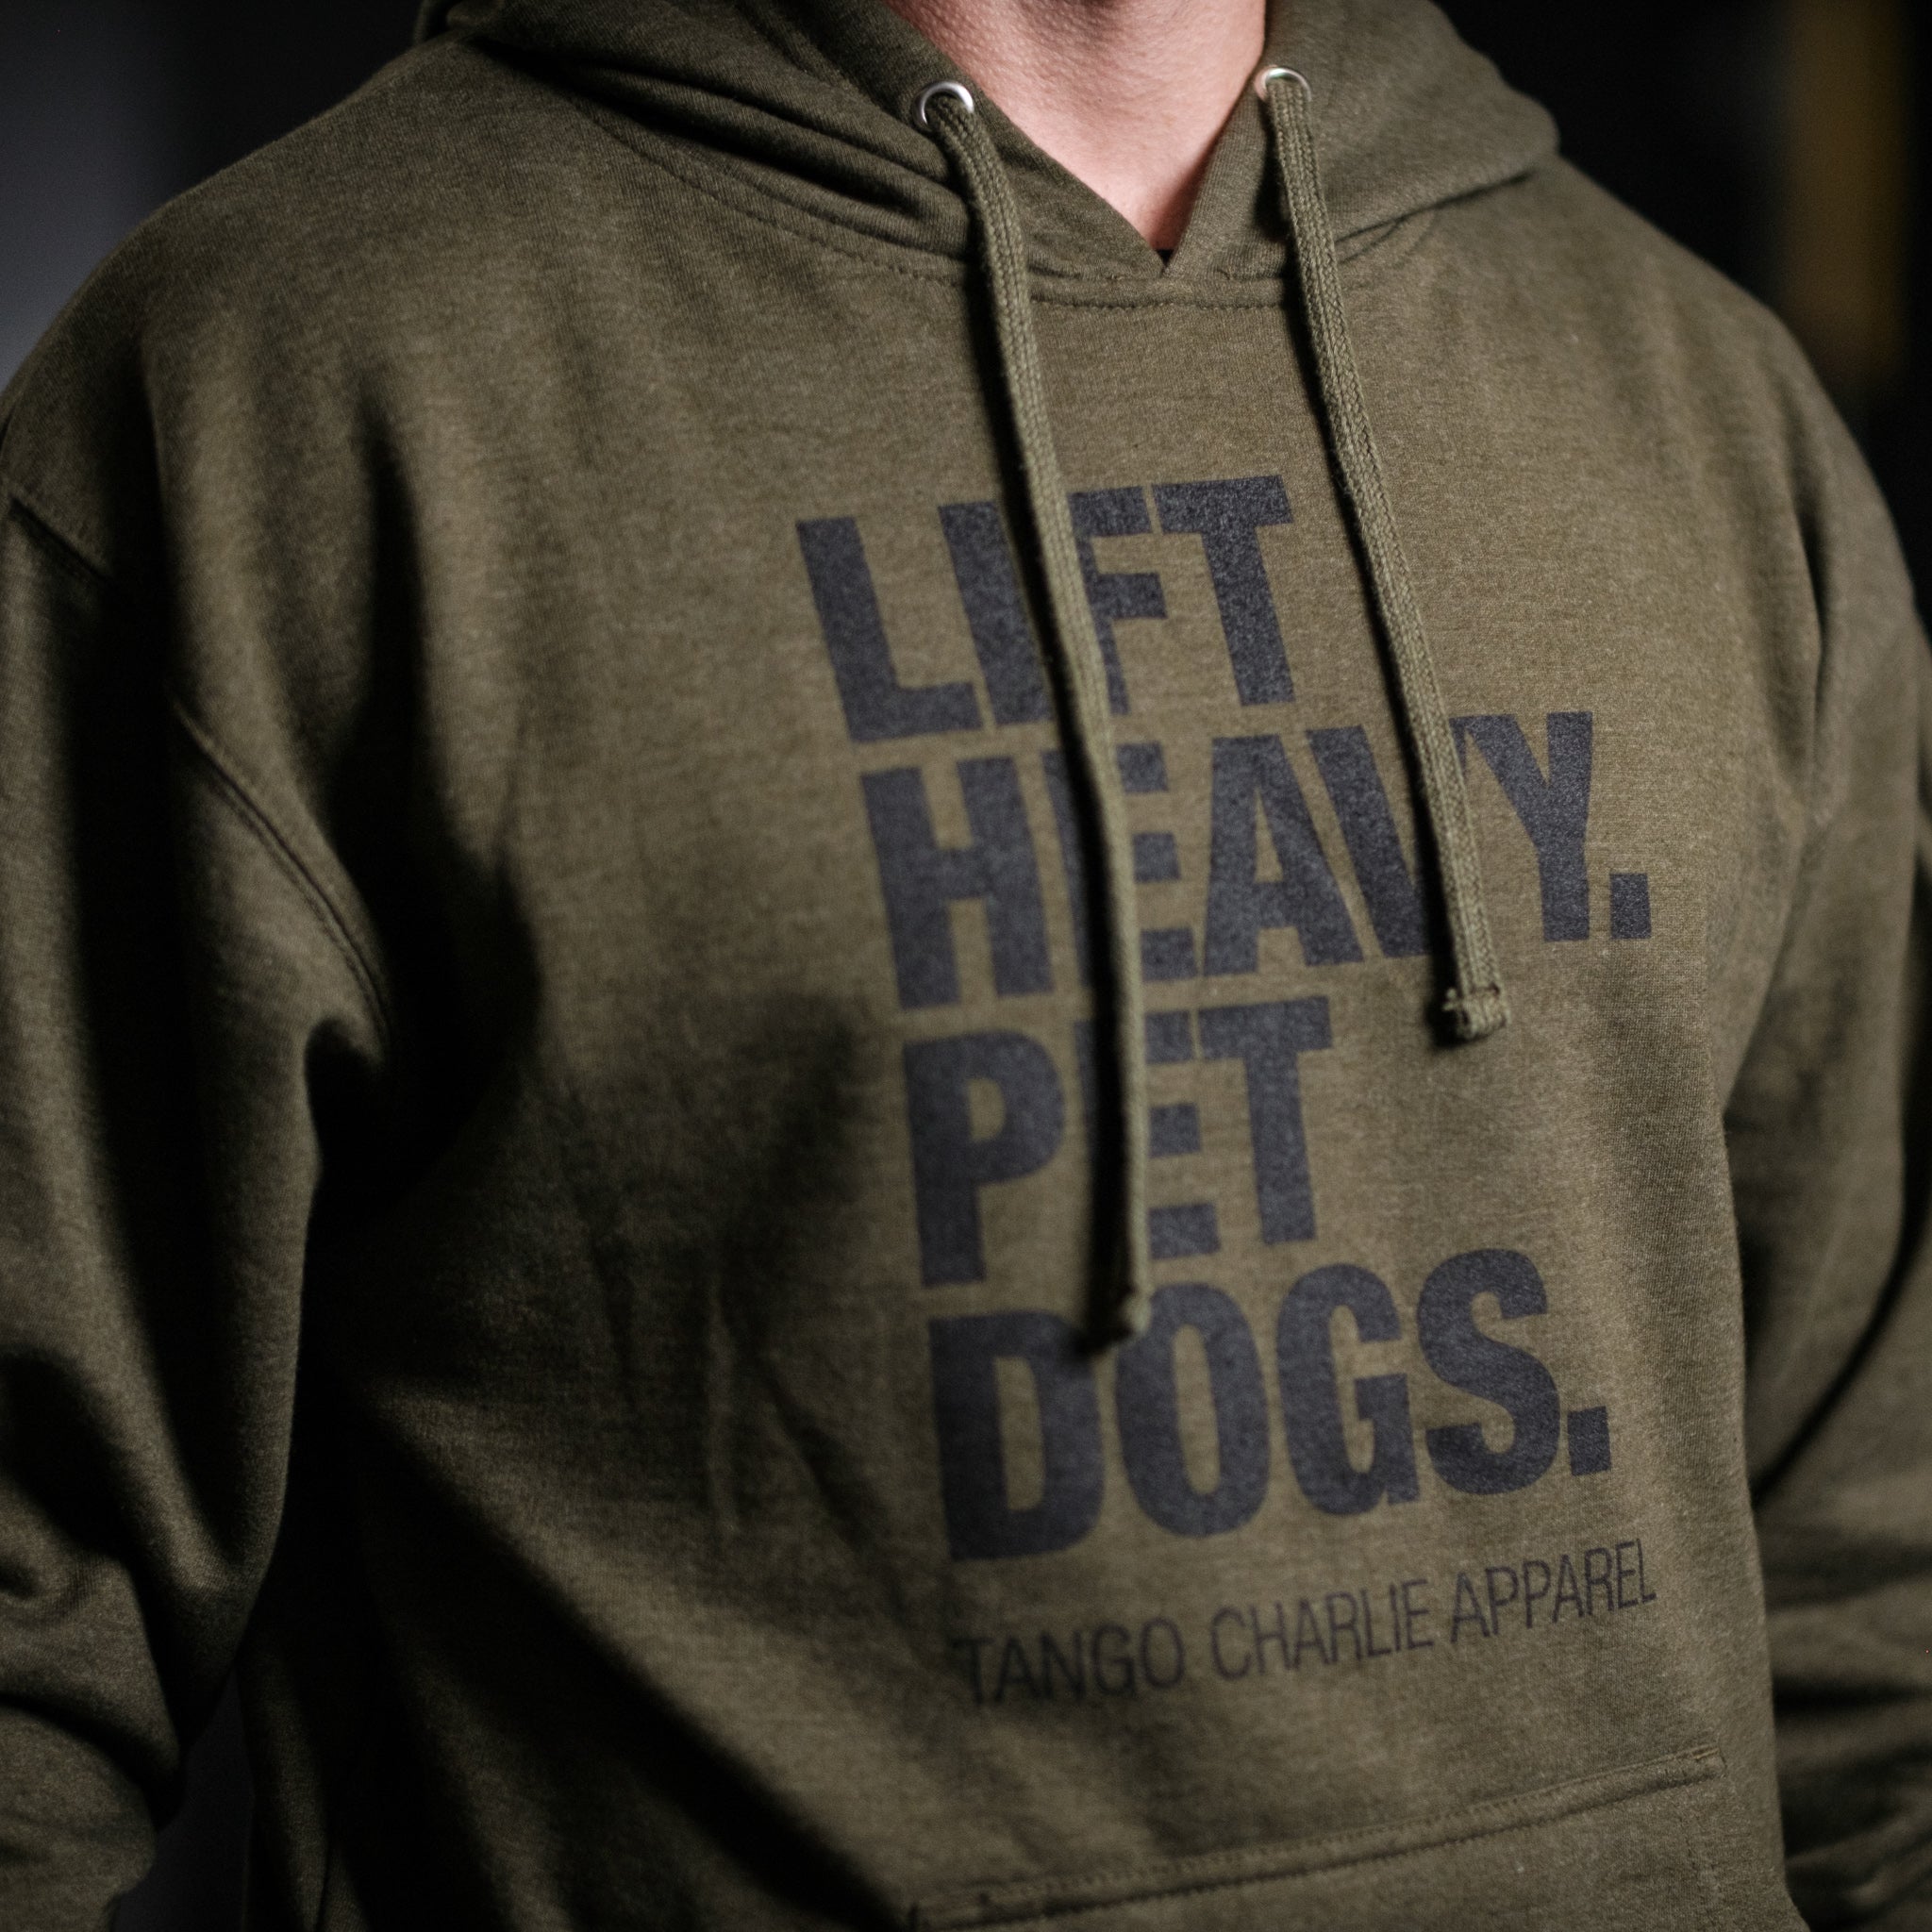 Lift Heavy. Pet Dogs. - Hoodie